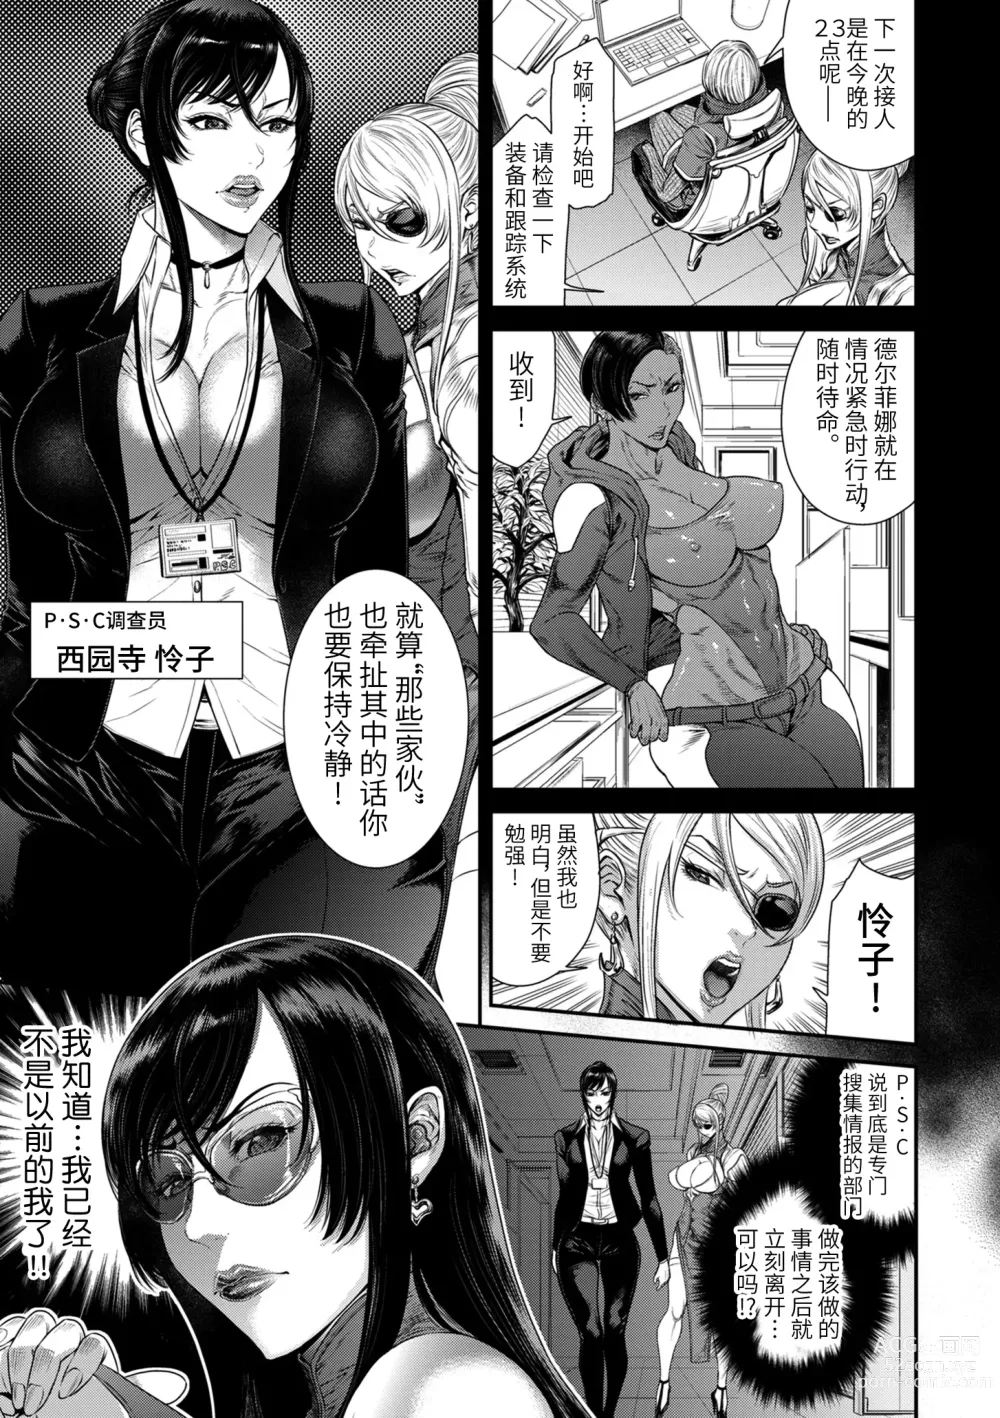 Page 9 of manga P.S.C Sennyuu Sousakan Reiko 1